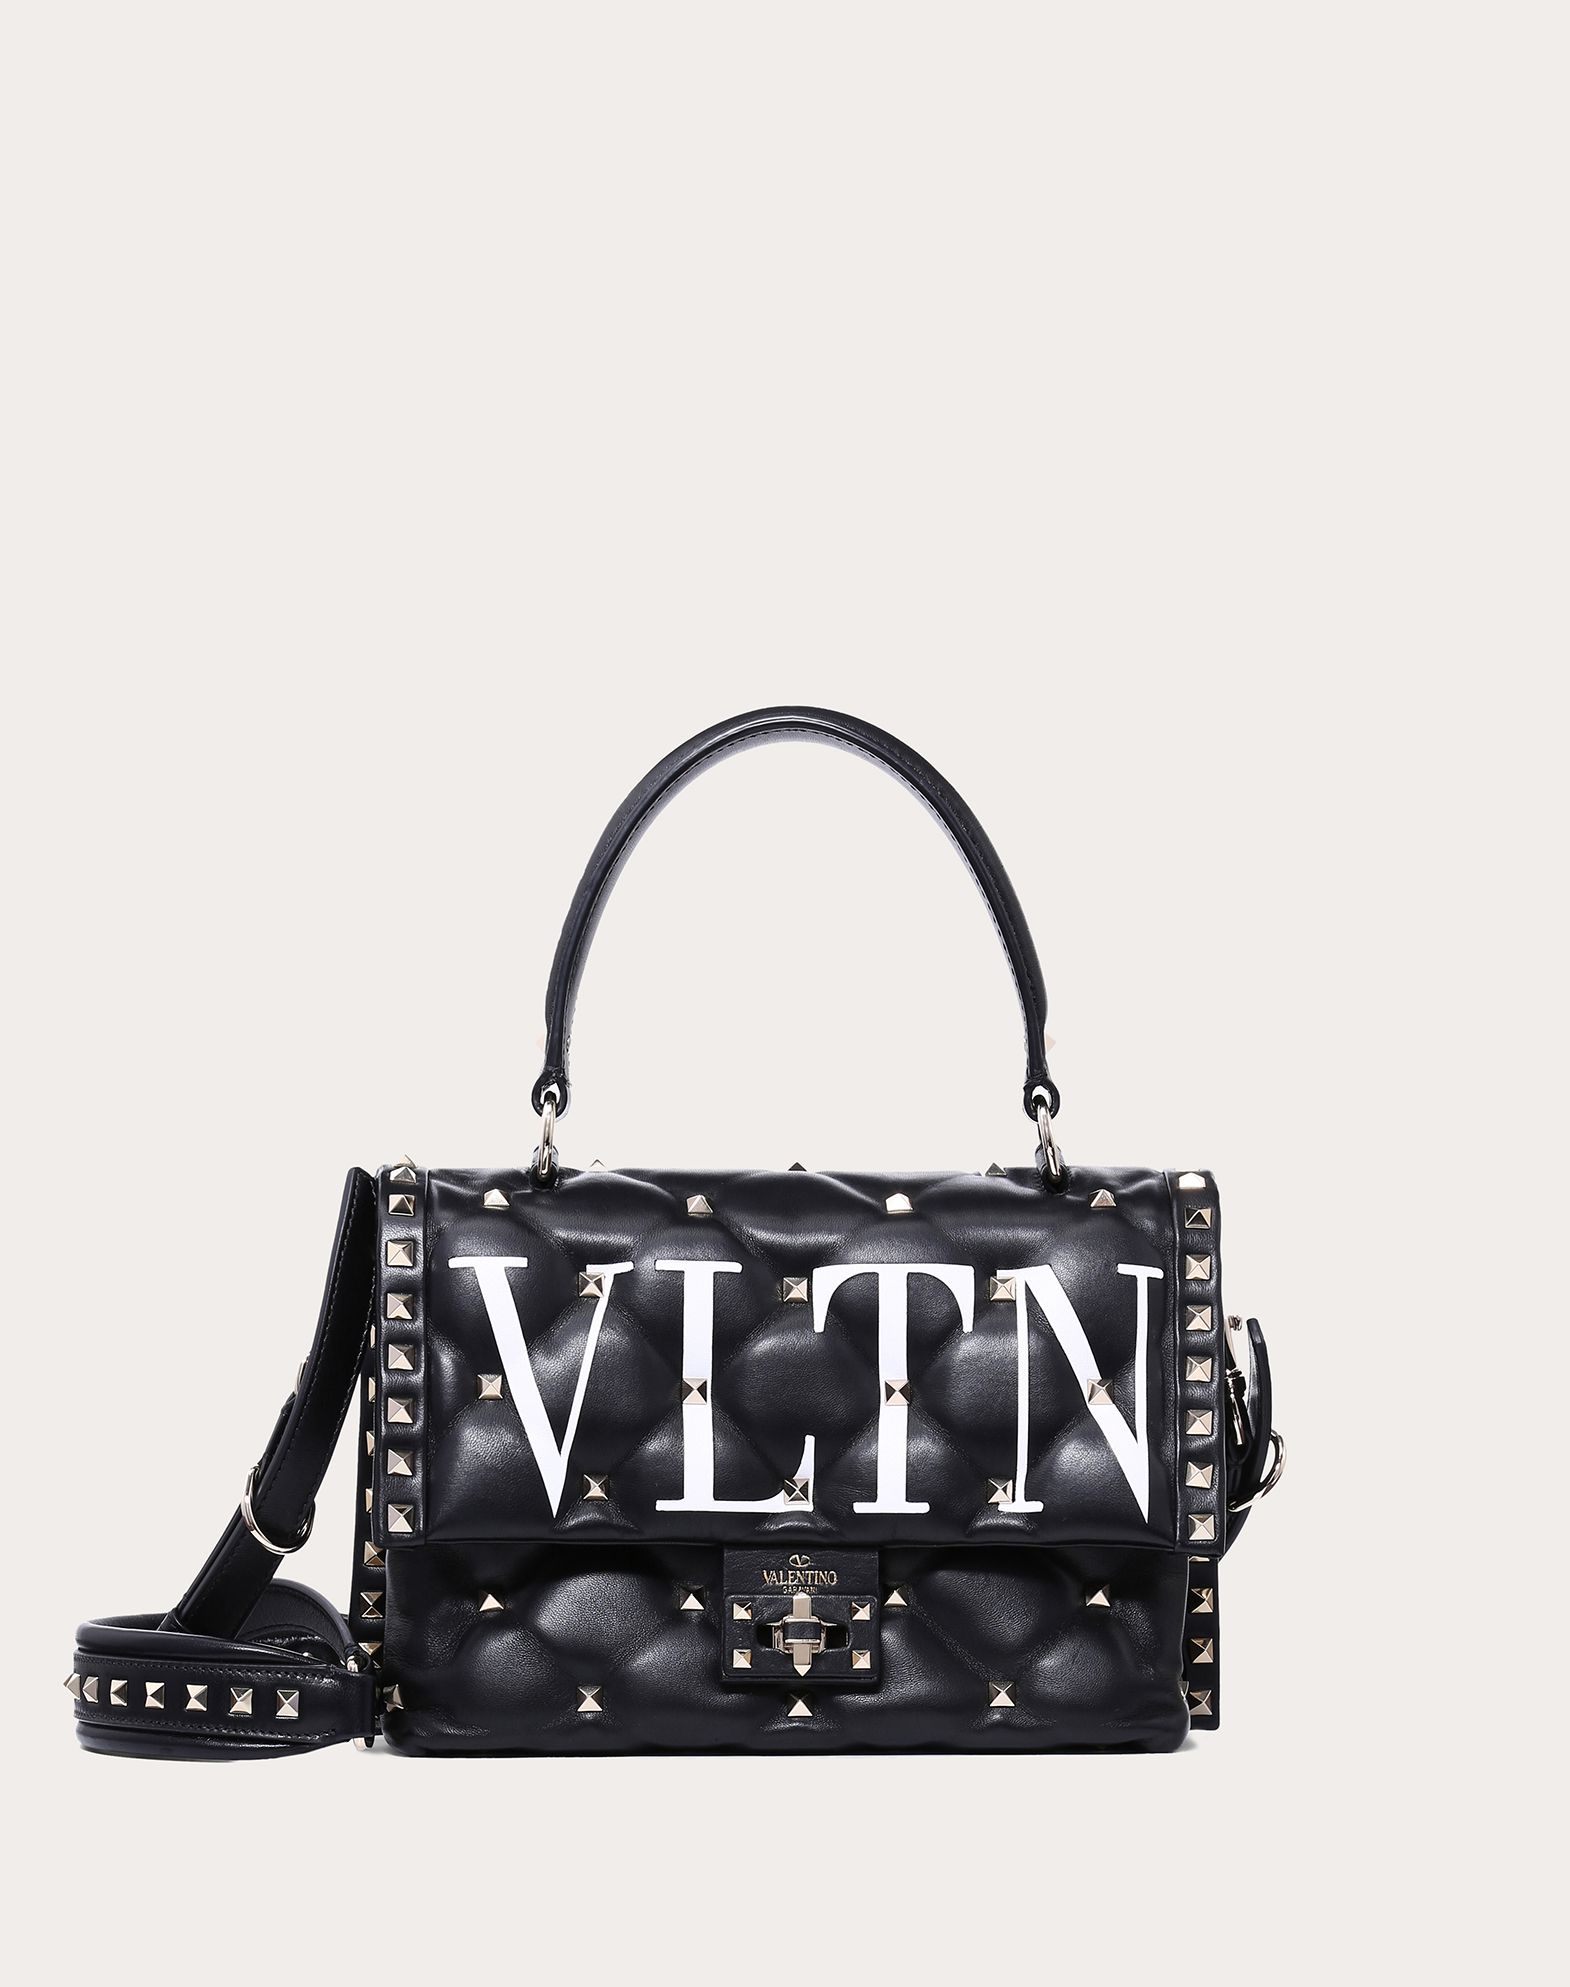 Most Popular Valentino Handbags | semashow.com